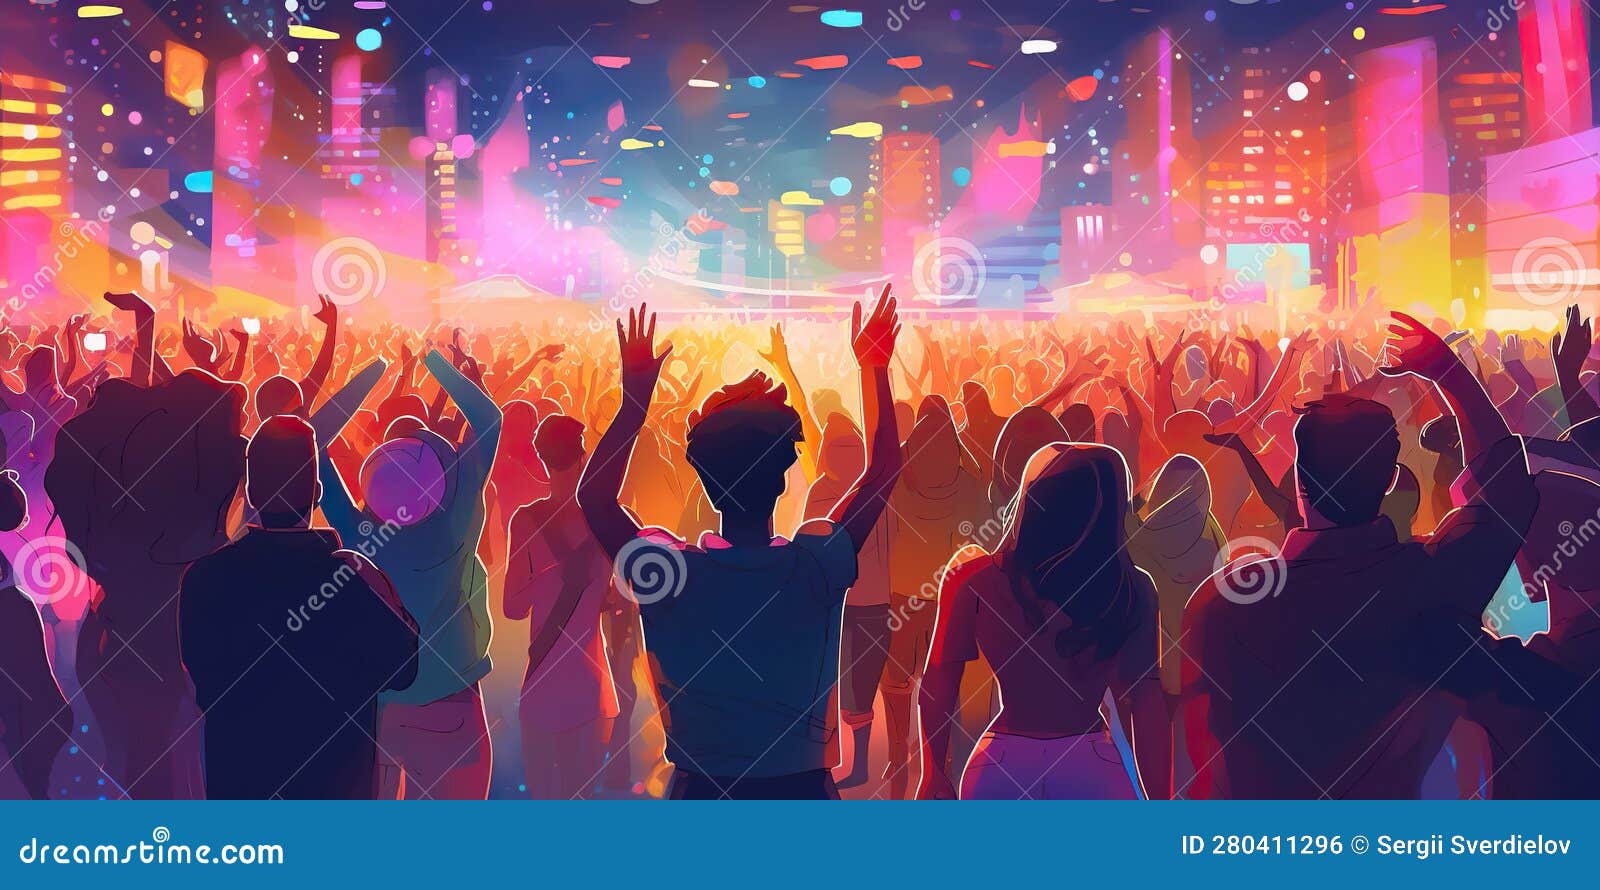 In a Vibrant Nightclub, People Dance Joyfully at a Music Festival ...